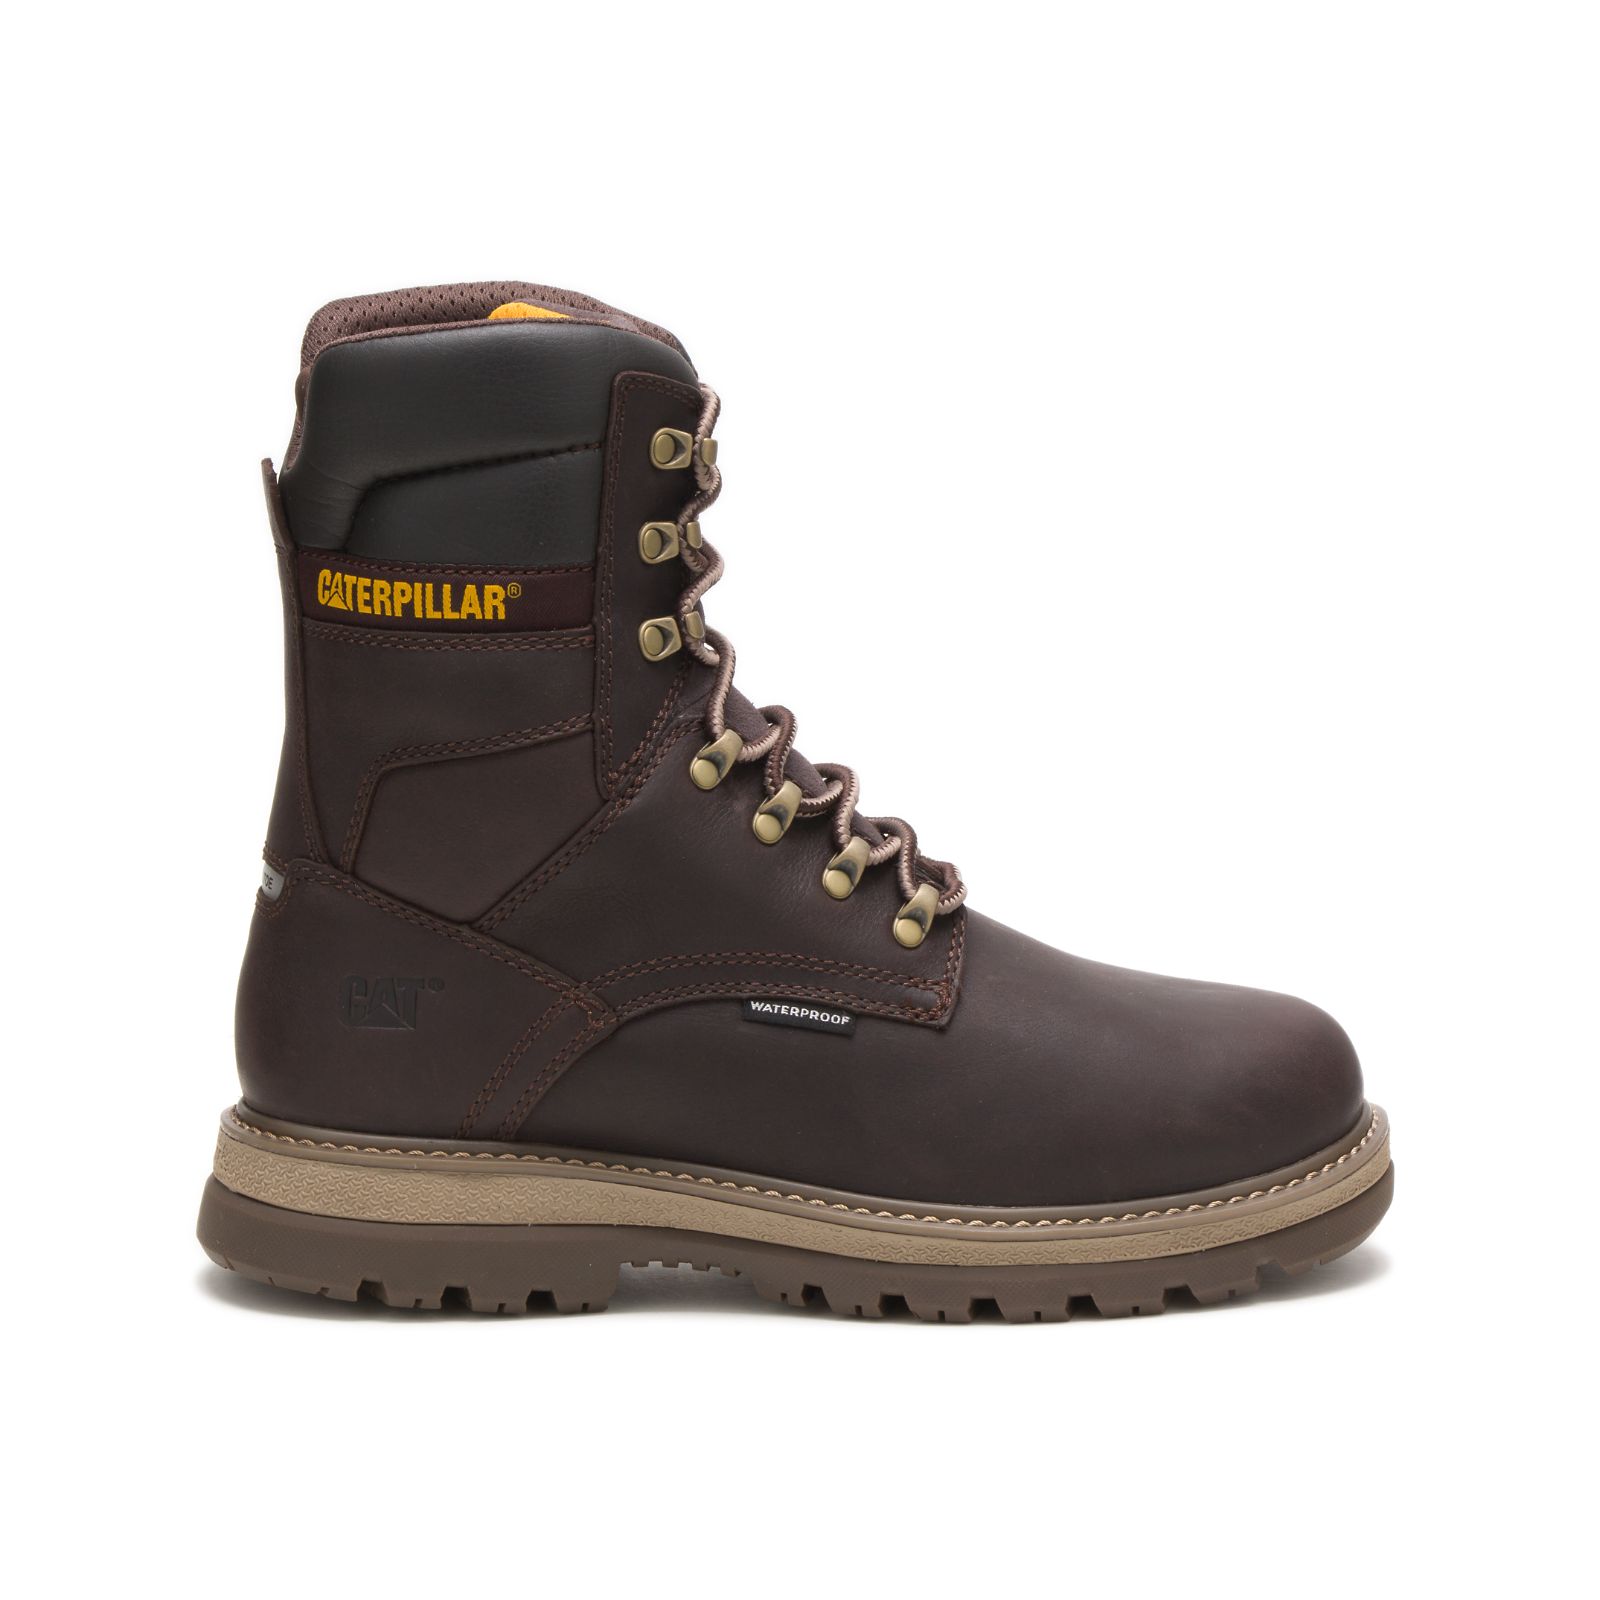 Caterpillar Work Boots UAE Online - Caterpillar Fairbanks 8" Waterproof Tx Steel Toe Mens - Brown QKIZUF049